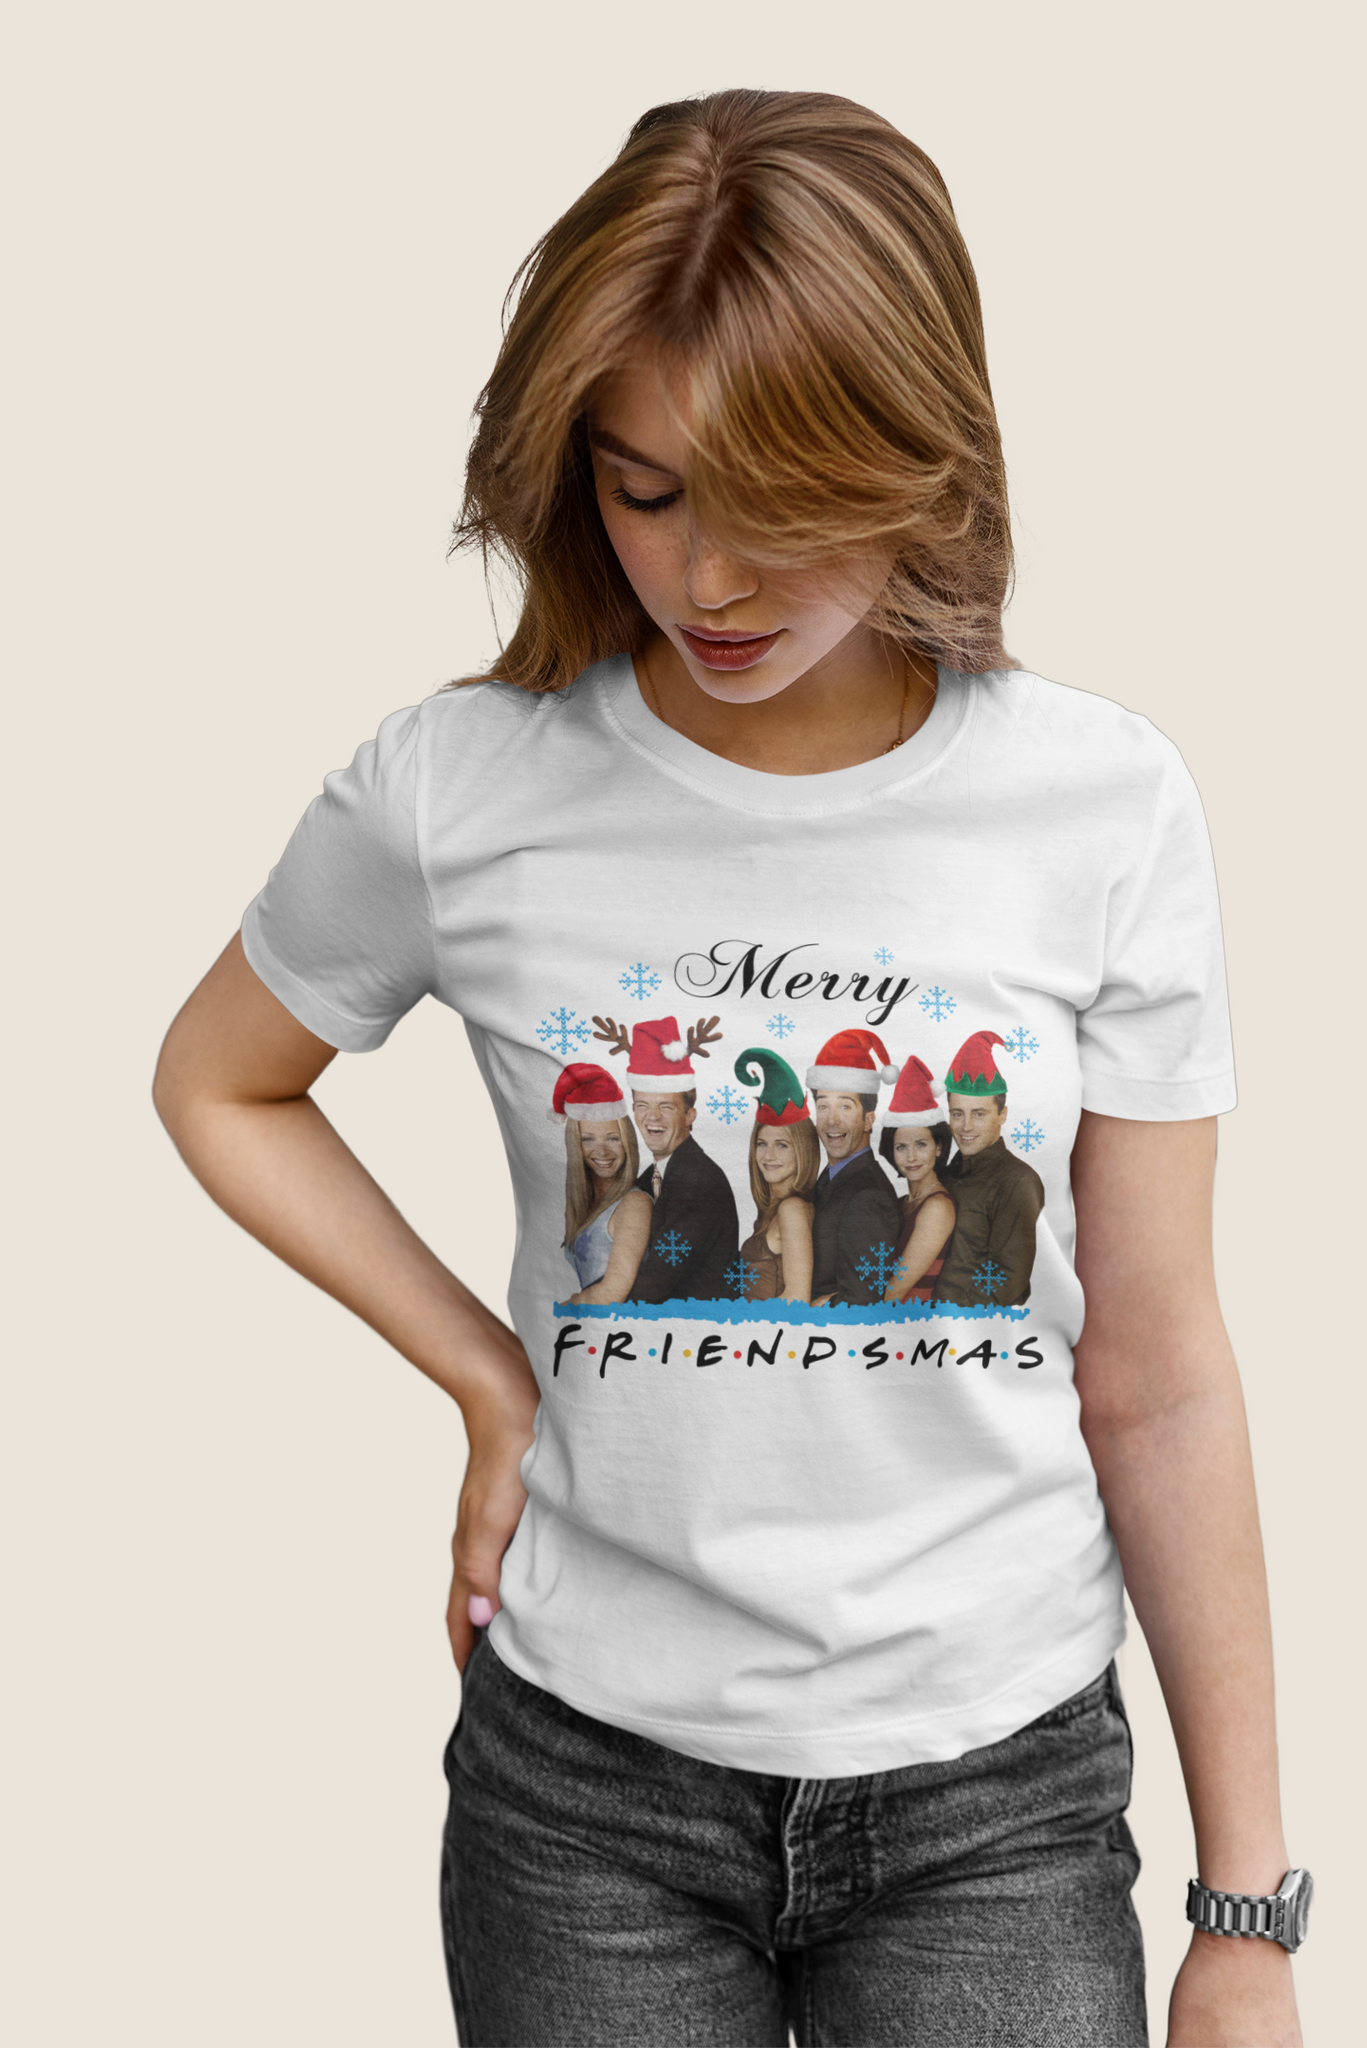 Friends TV Show T Shirt, Friends Characters T Shirt, Merry Friendsmas Tshirt, Christmas Gifts